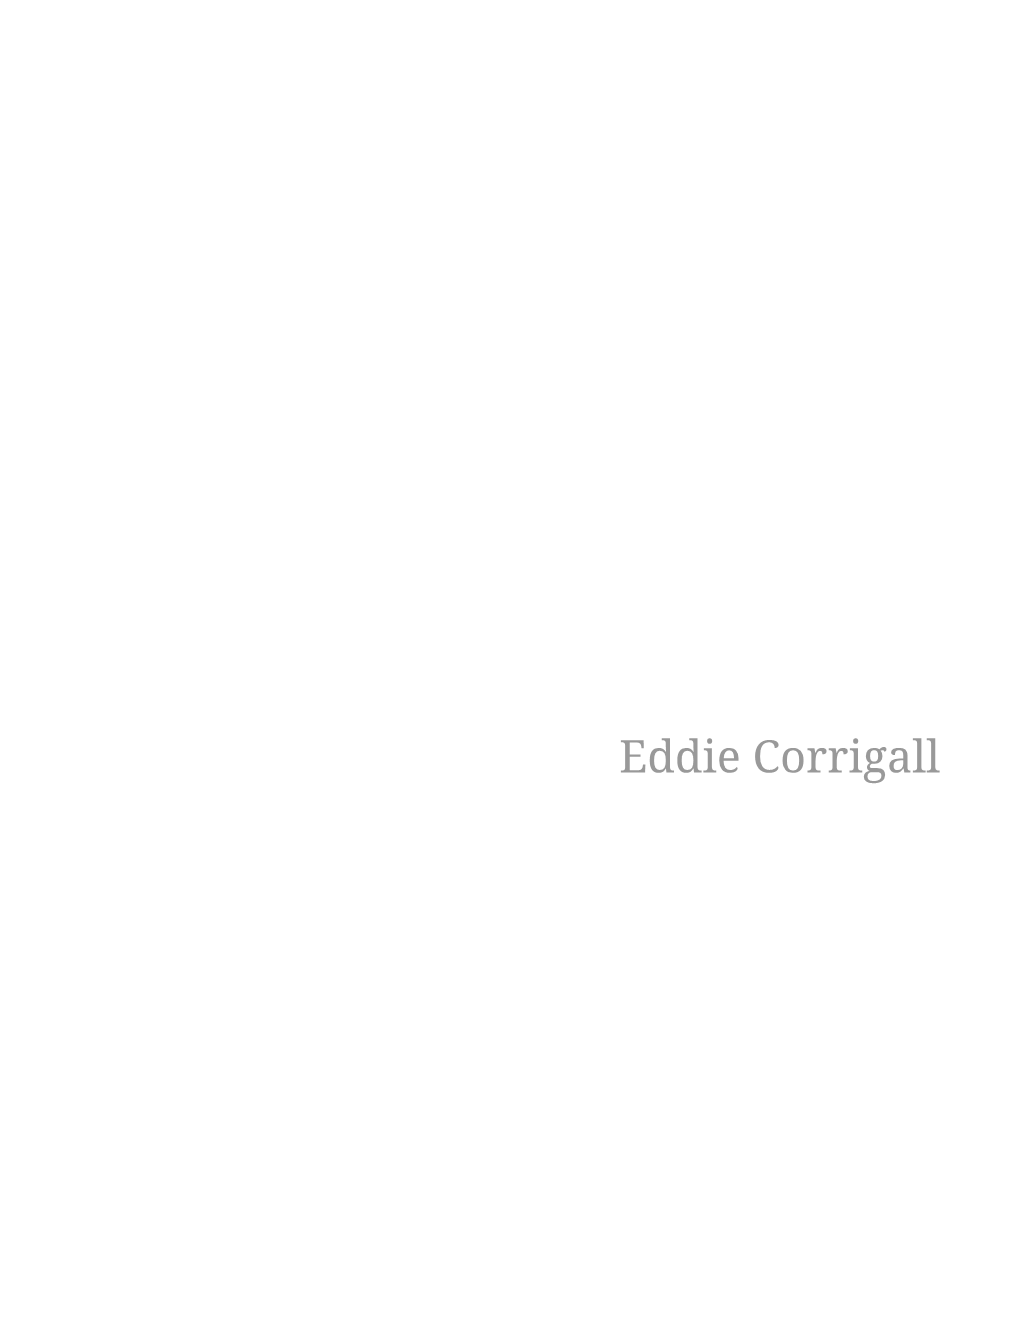 Eddie Corrigall NOTE Last Updated on 2015-12-17